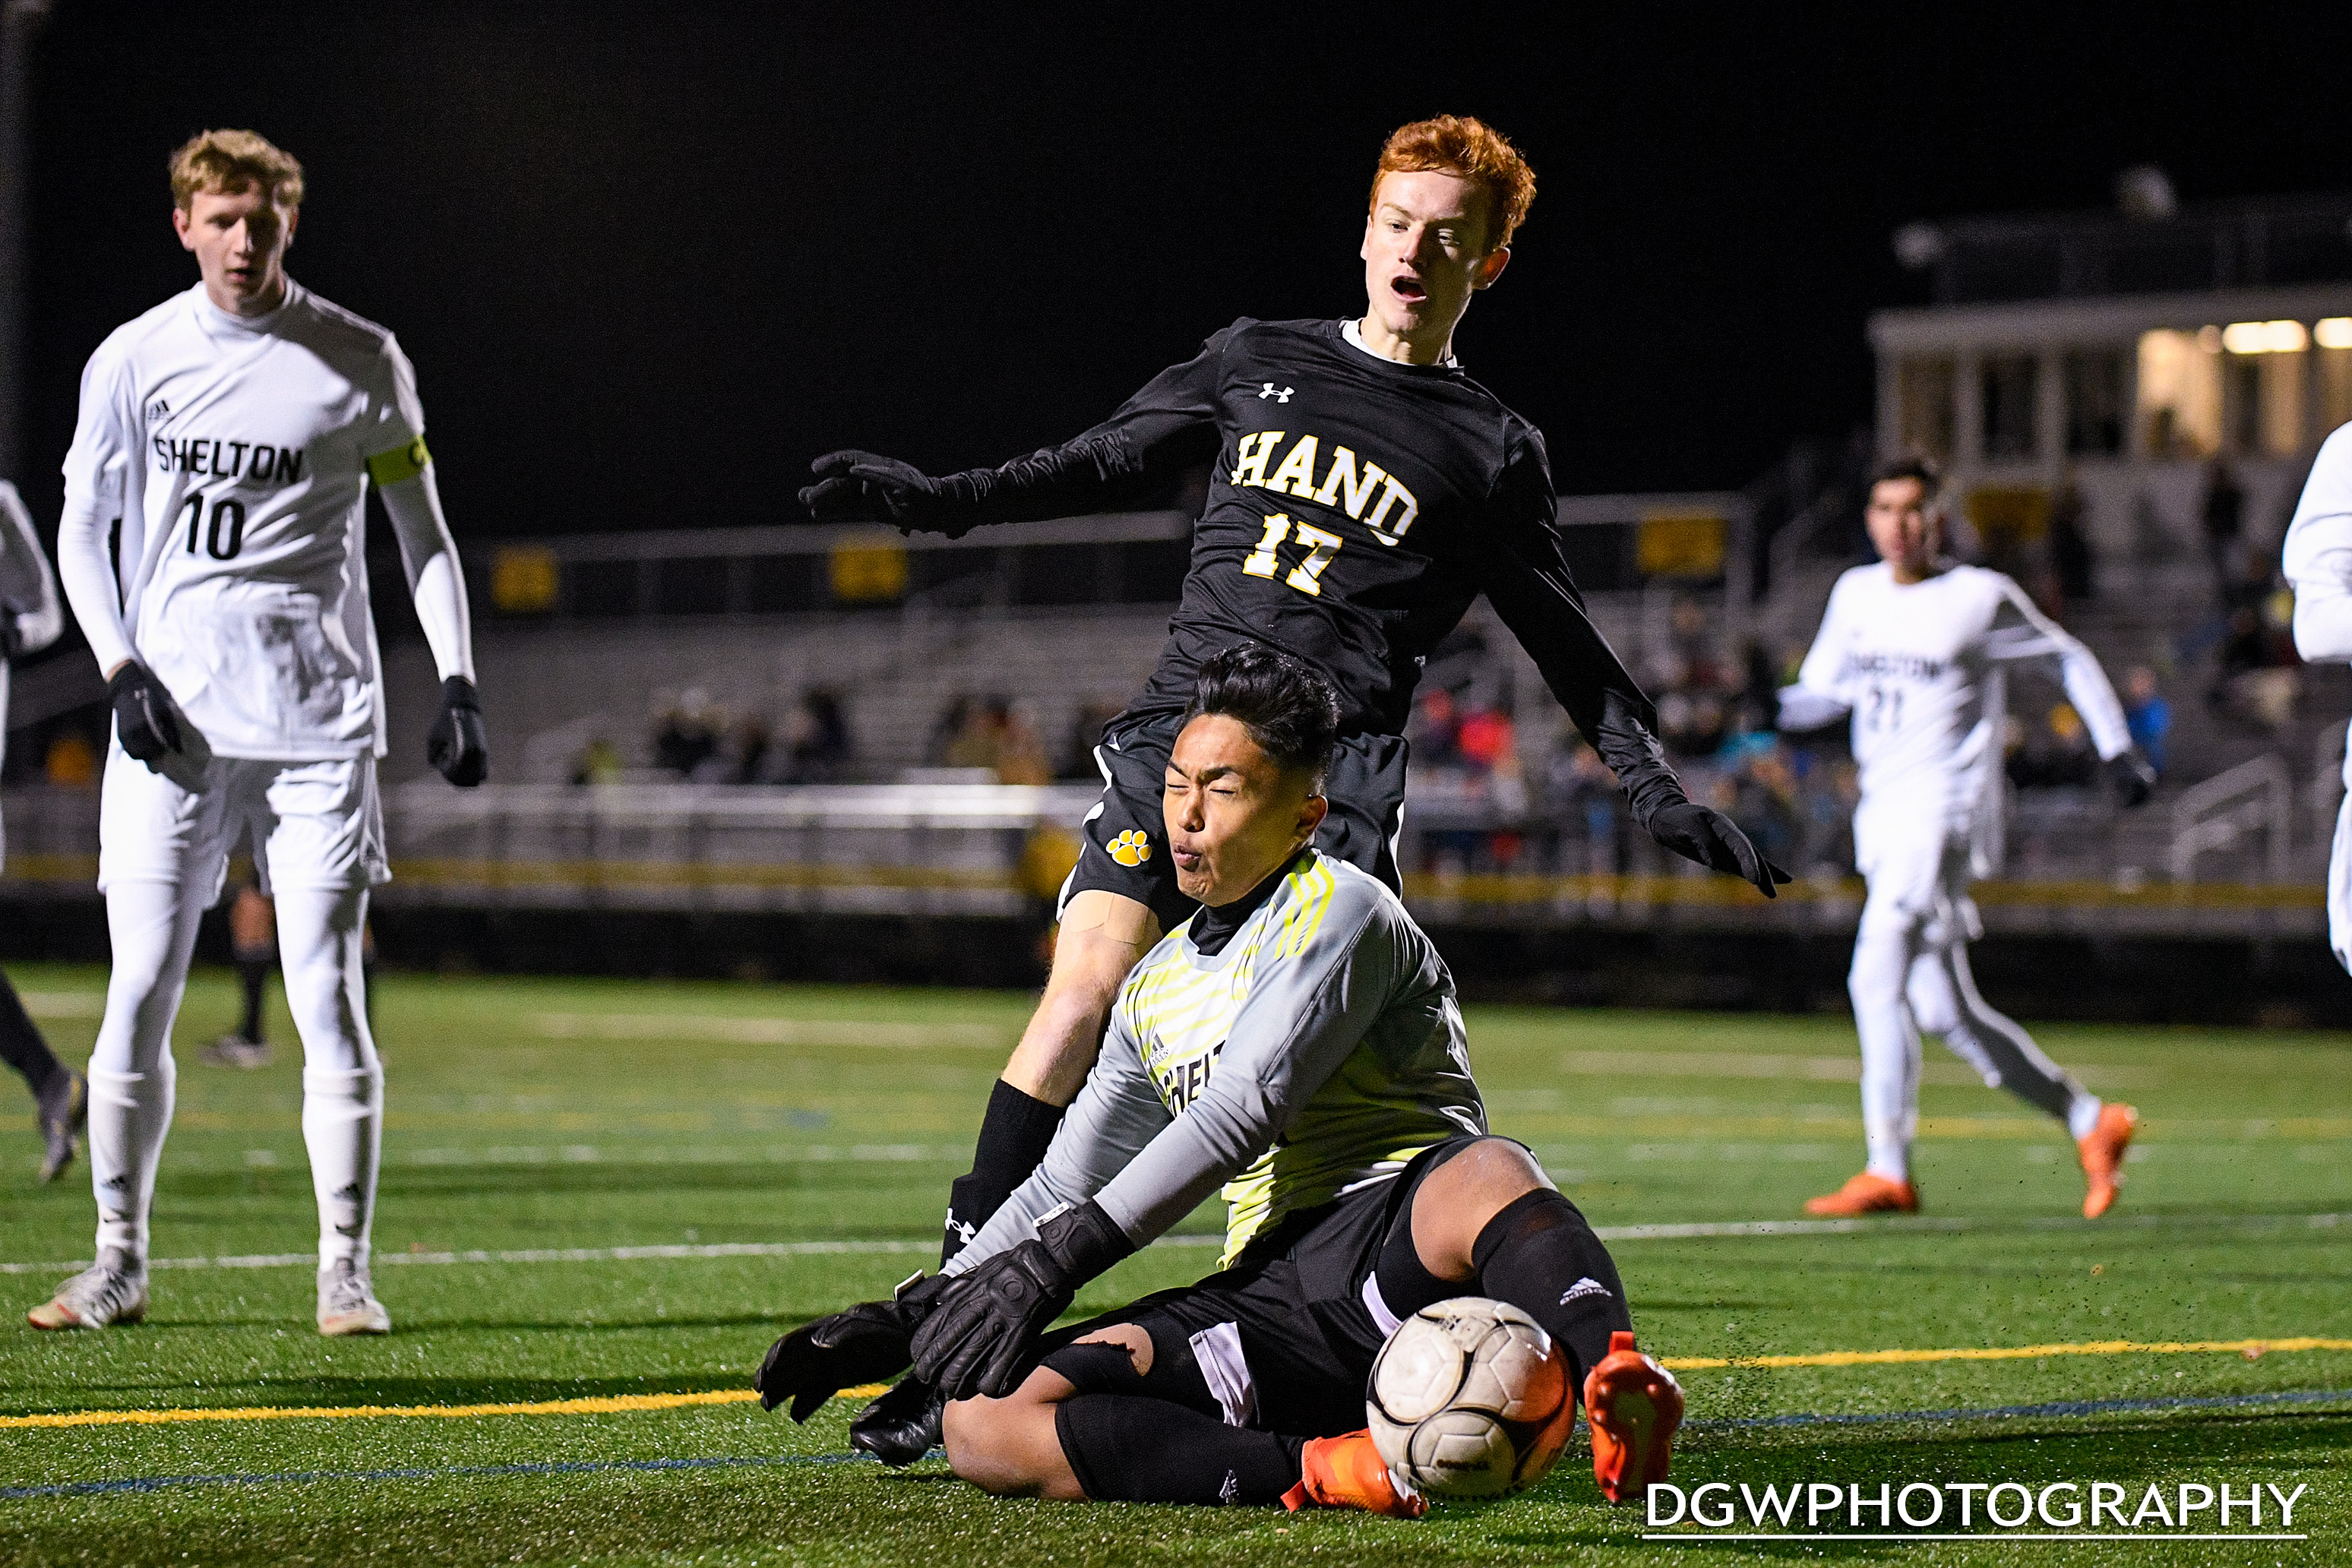 Daniel Hand vs. Shelton High – High School Soccer I DGWPhotography